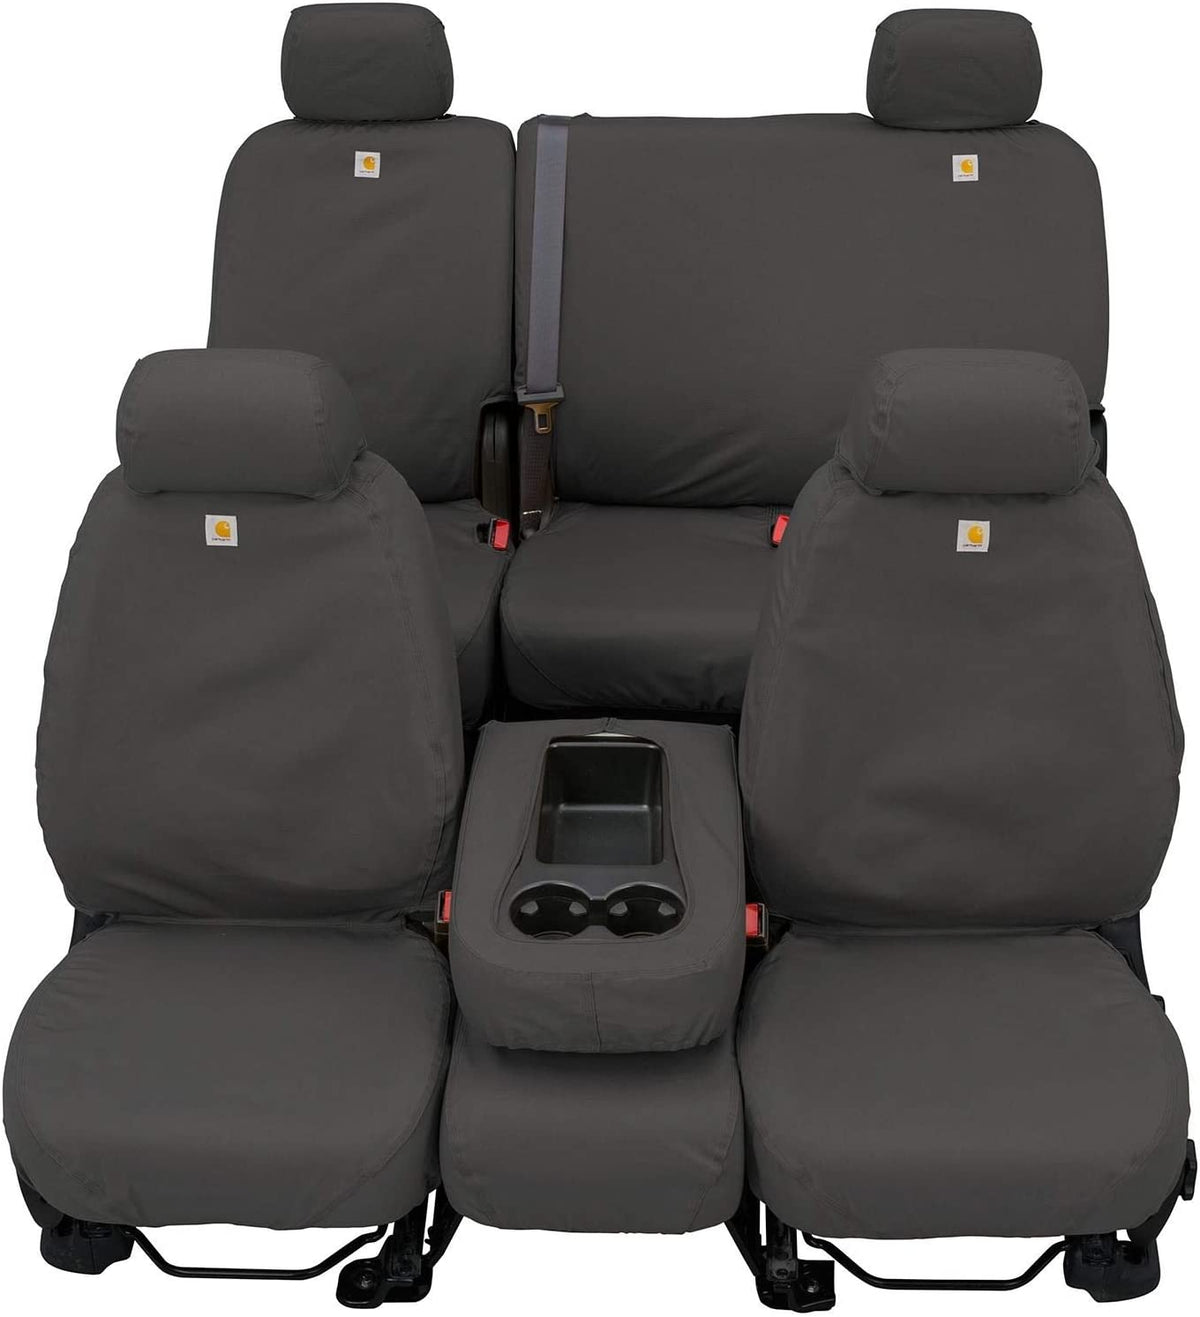 CARHARTT SEATSAVER CUSTOM SEAT COVERS: SSC3458CAGY For Select Chevrolet Silverado/ GMC Sierra 2500, 3500